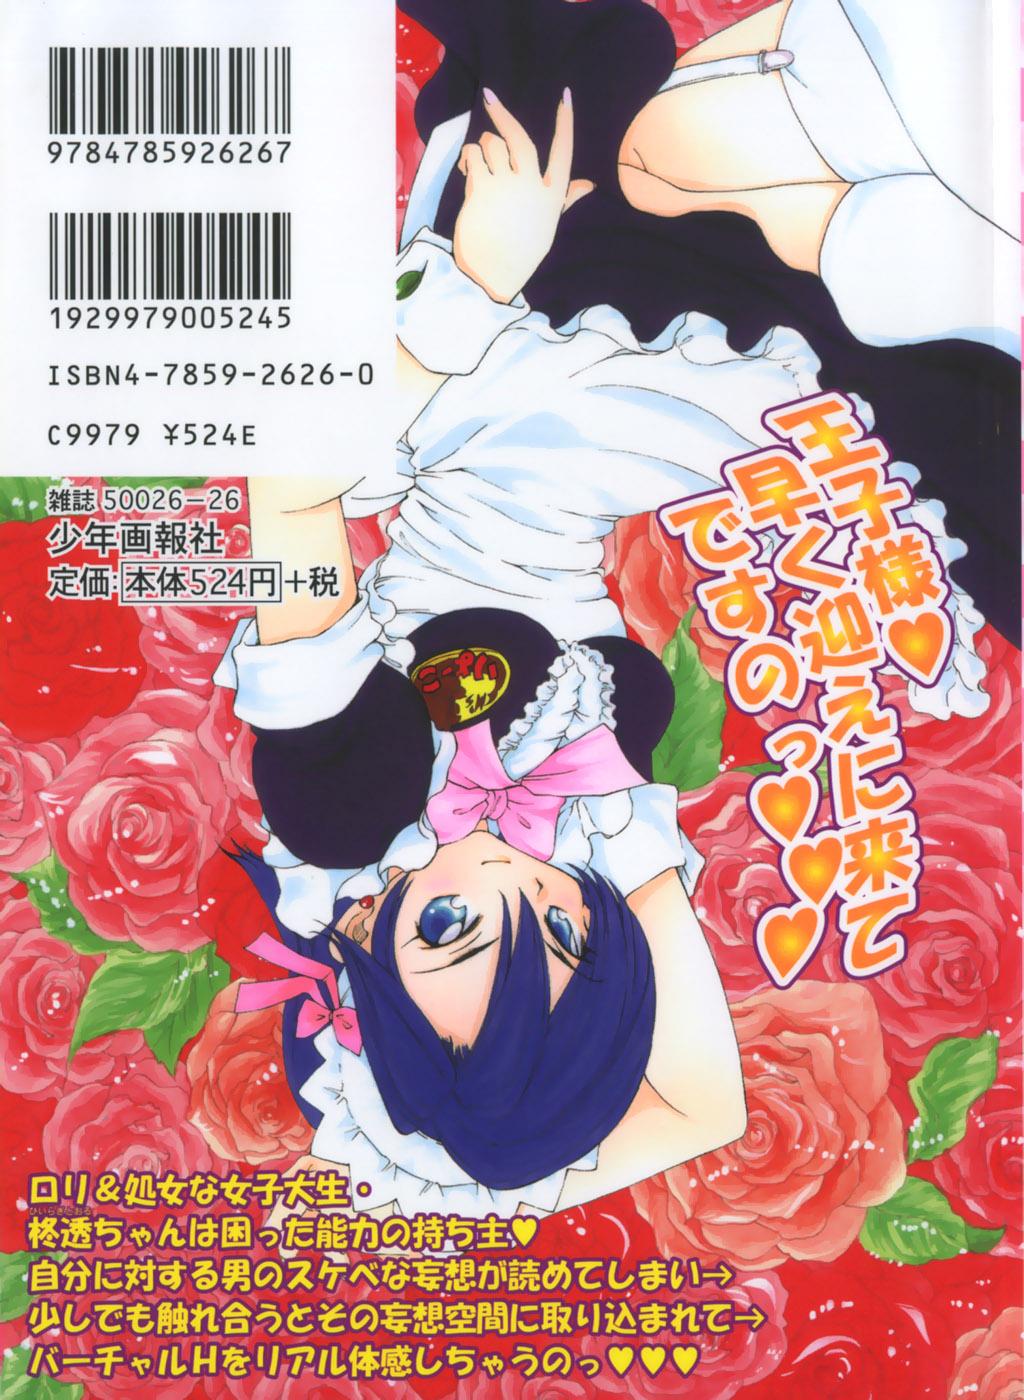 Koisuru Hanahana - The flowers fall in love 2 1